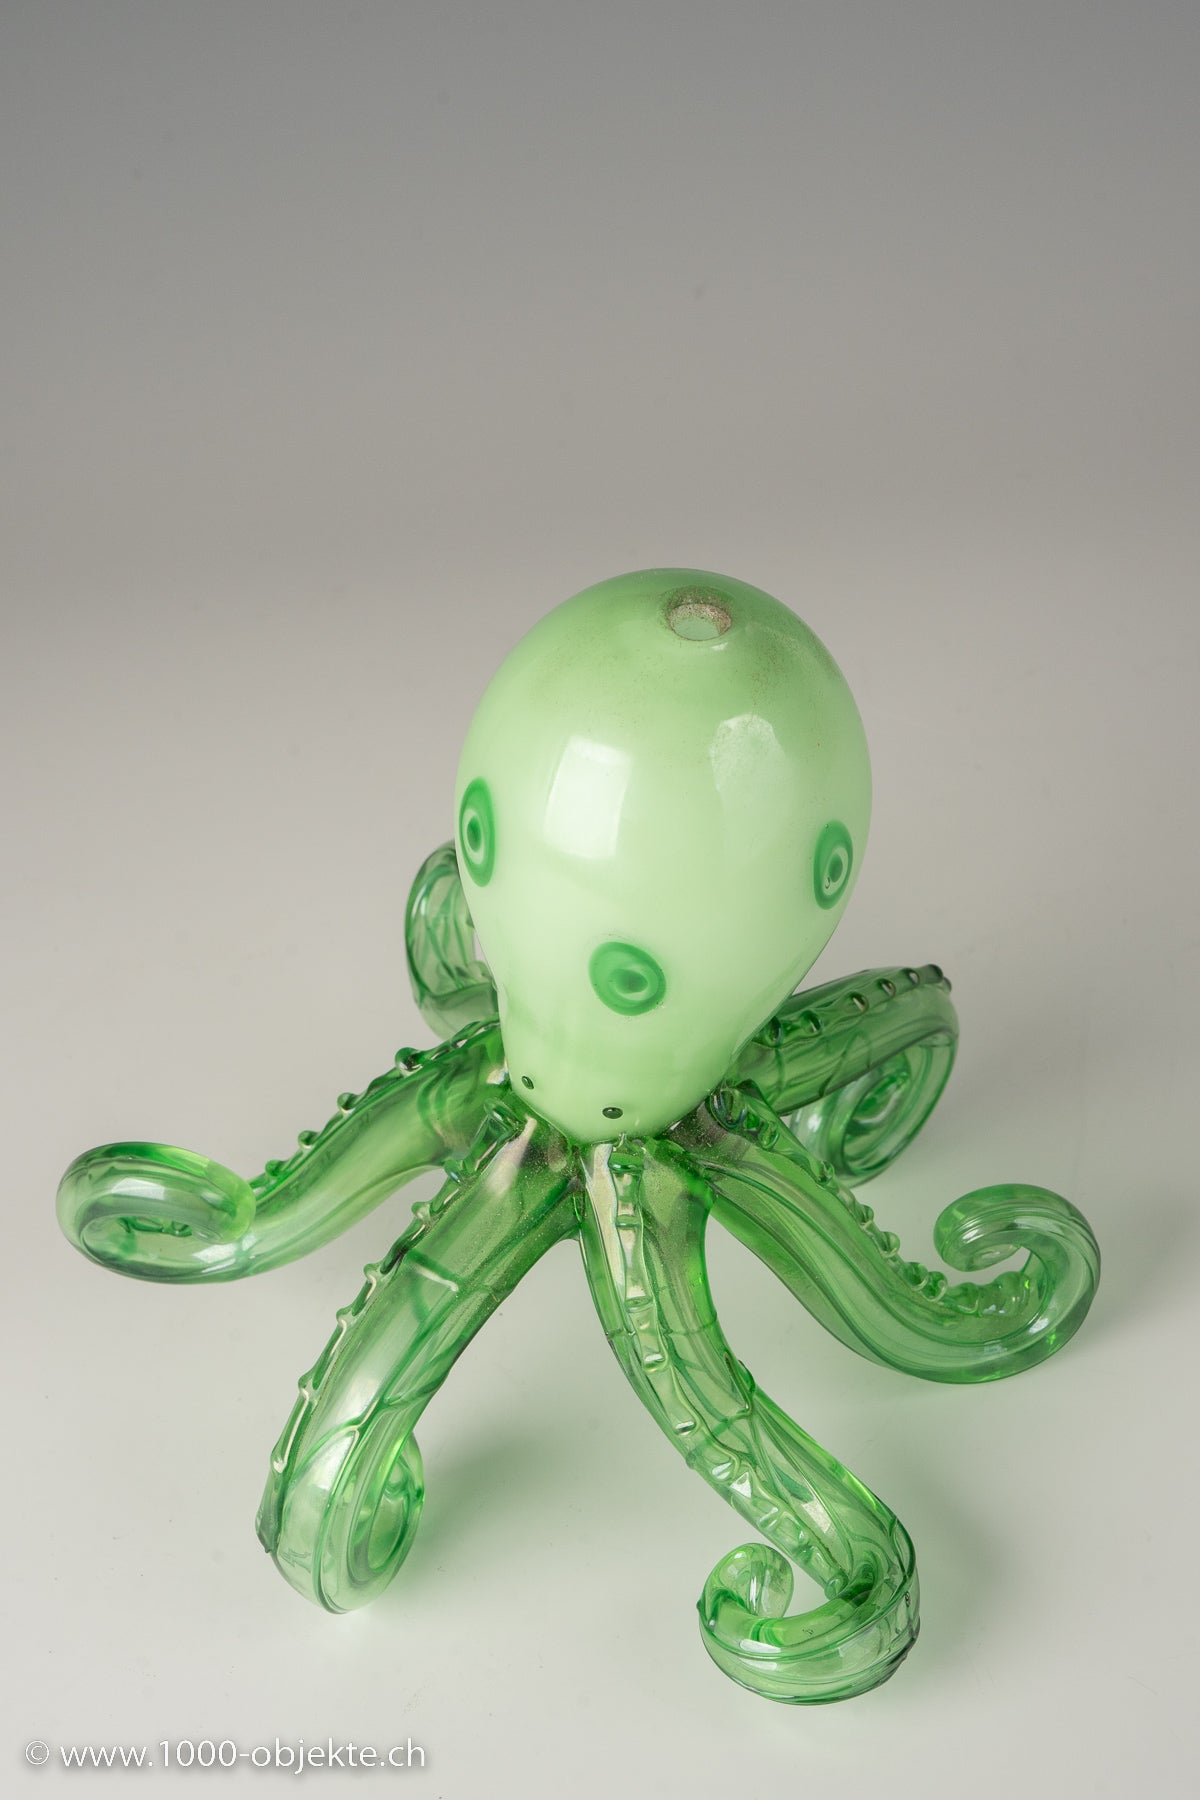 MVM Cappellin & C. Murano Art Glass Octopus, 1929 Design By Carlo Scarpa.